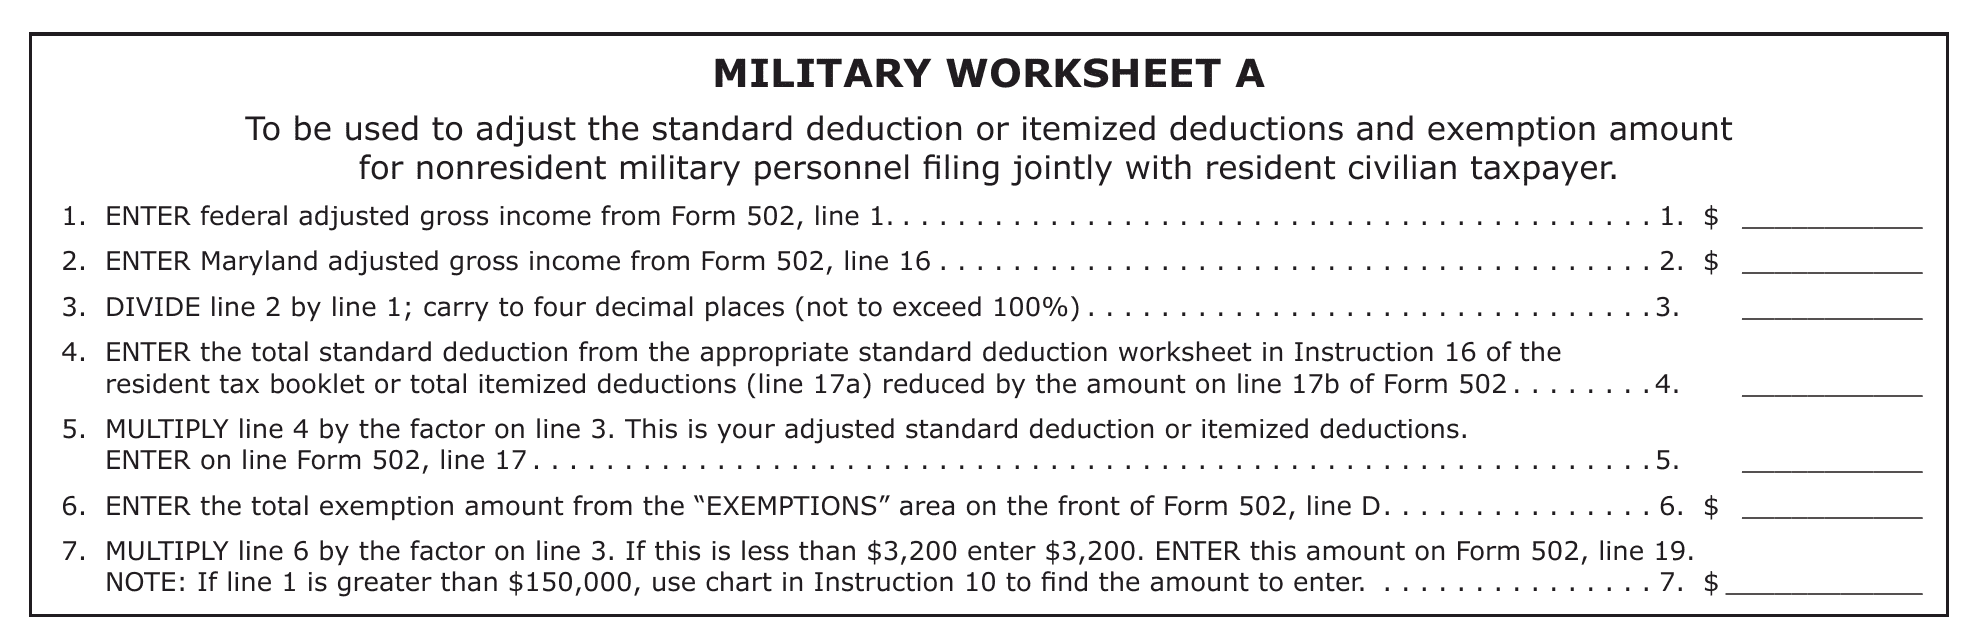 Worksheet A Military Worksheet - Maryland